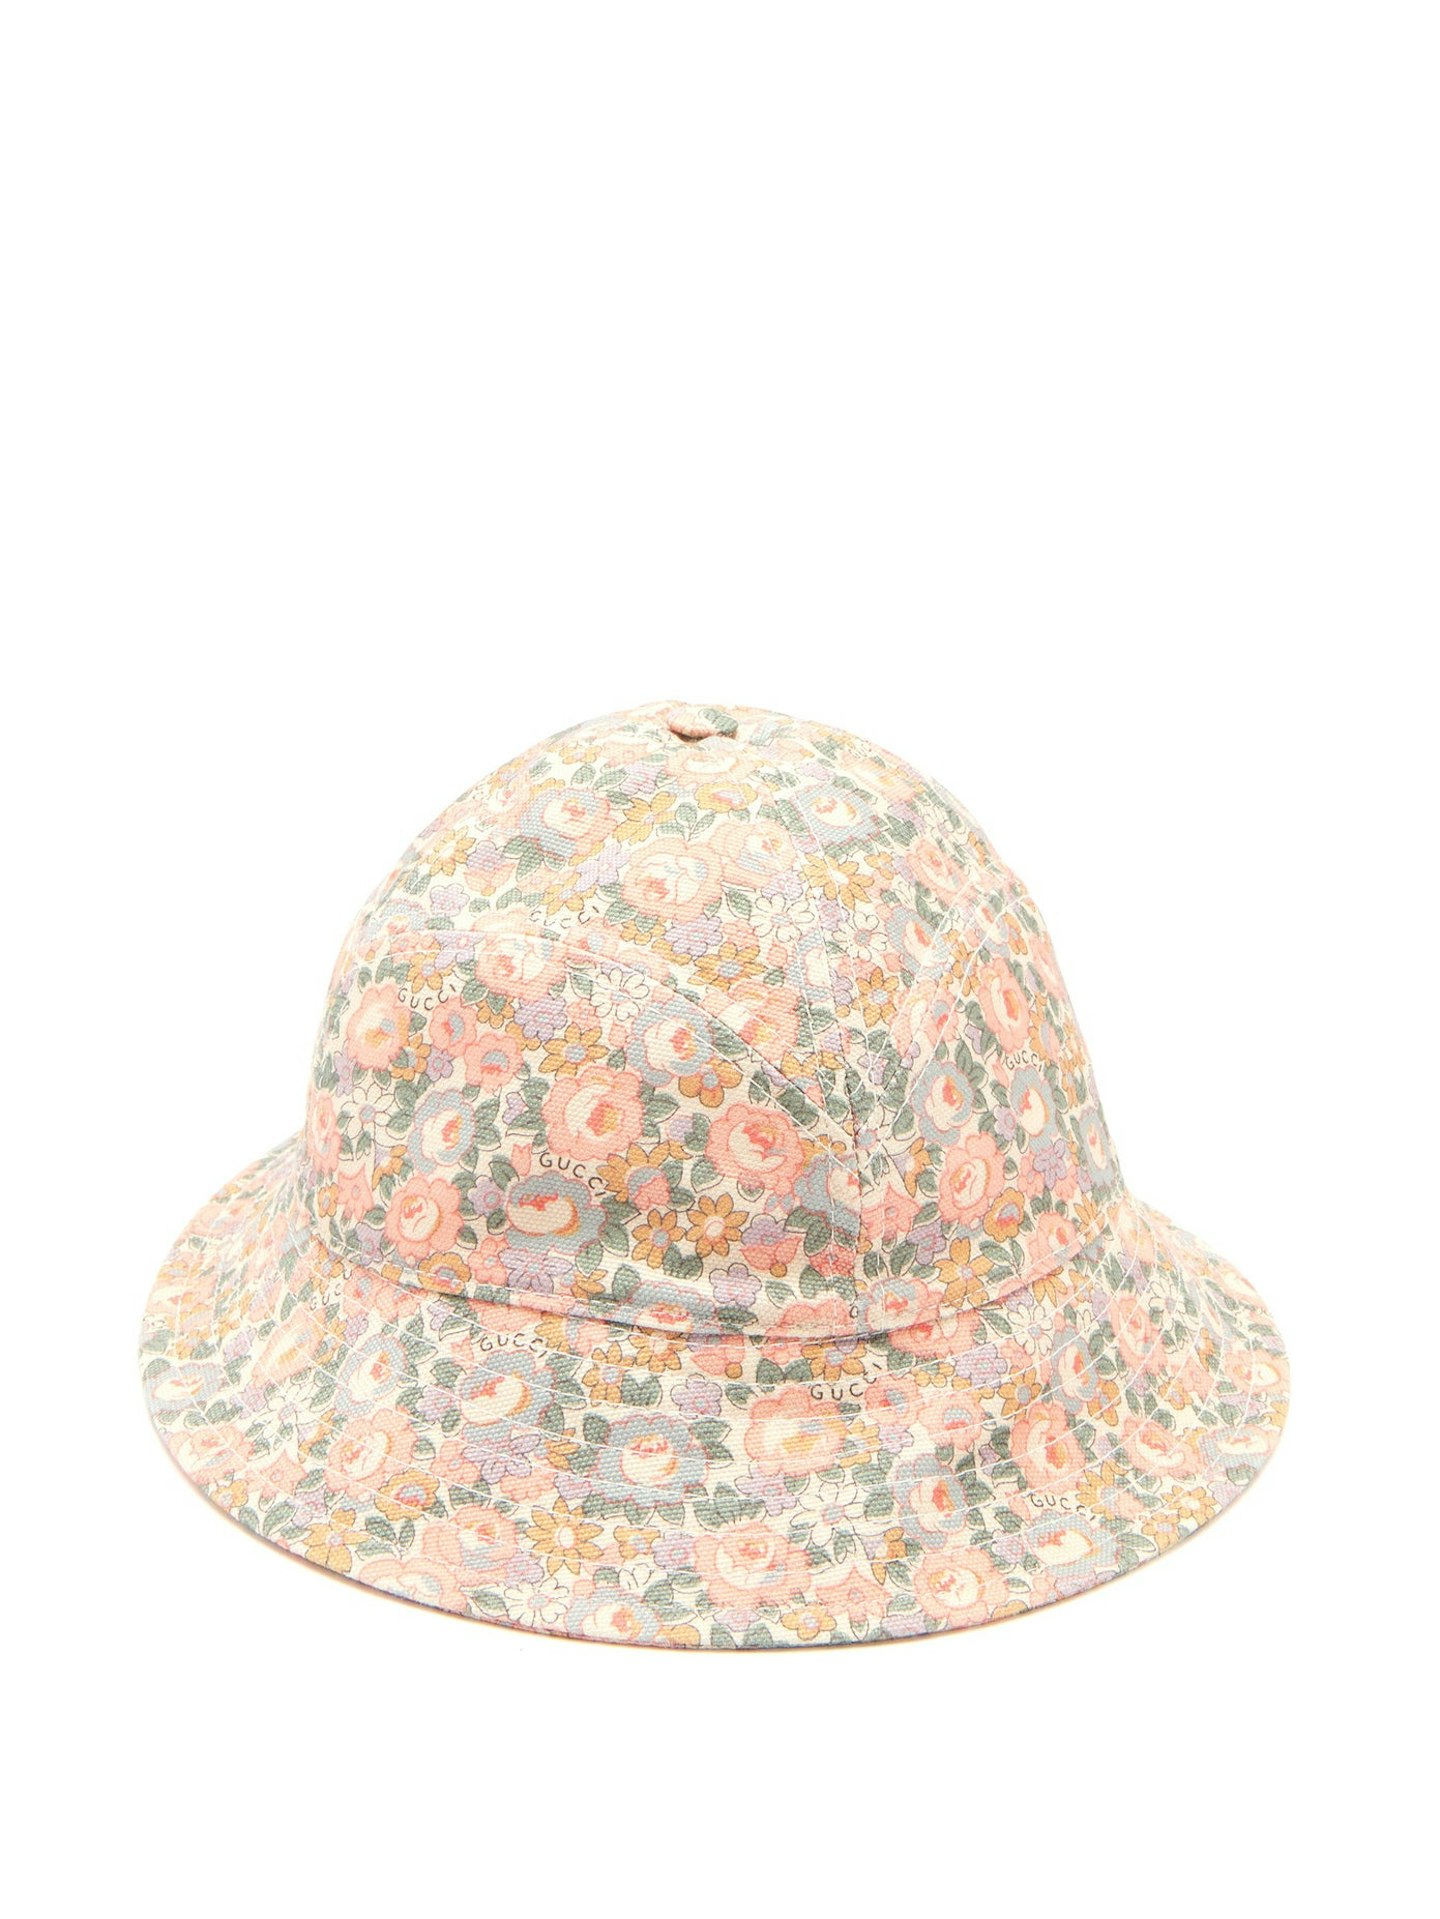 Gucci, Floral Print Bucket Hat, £310